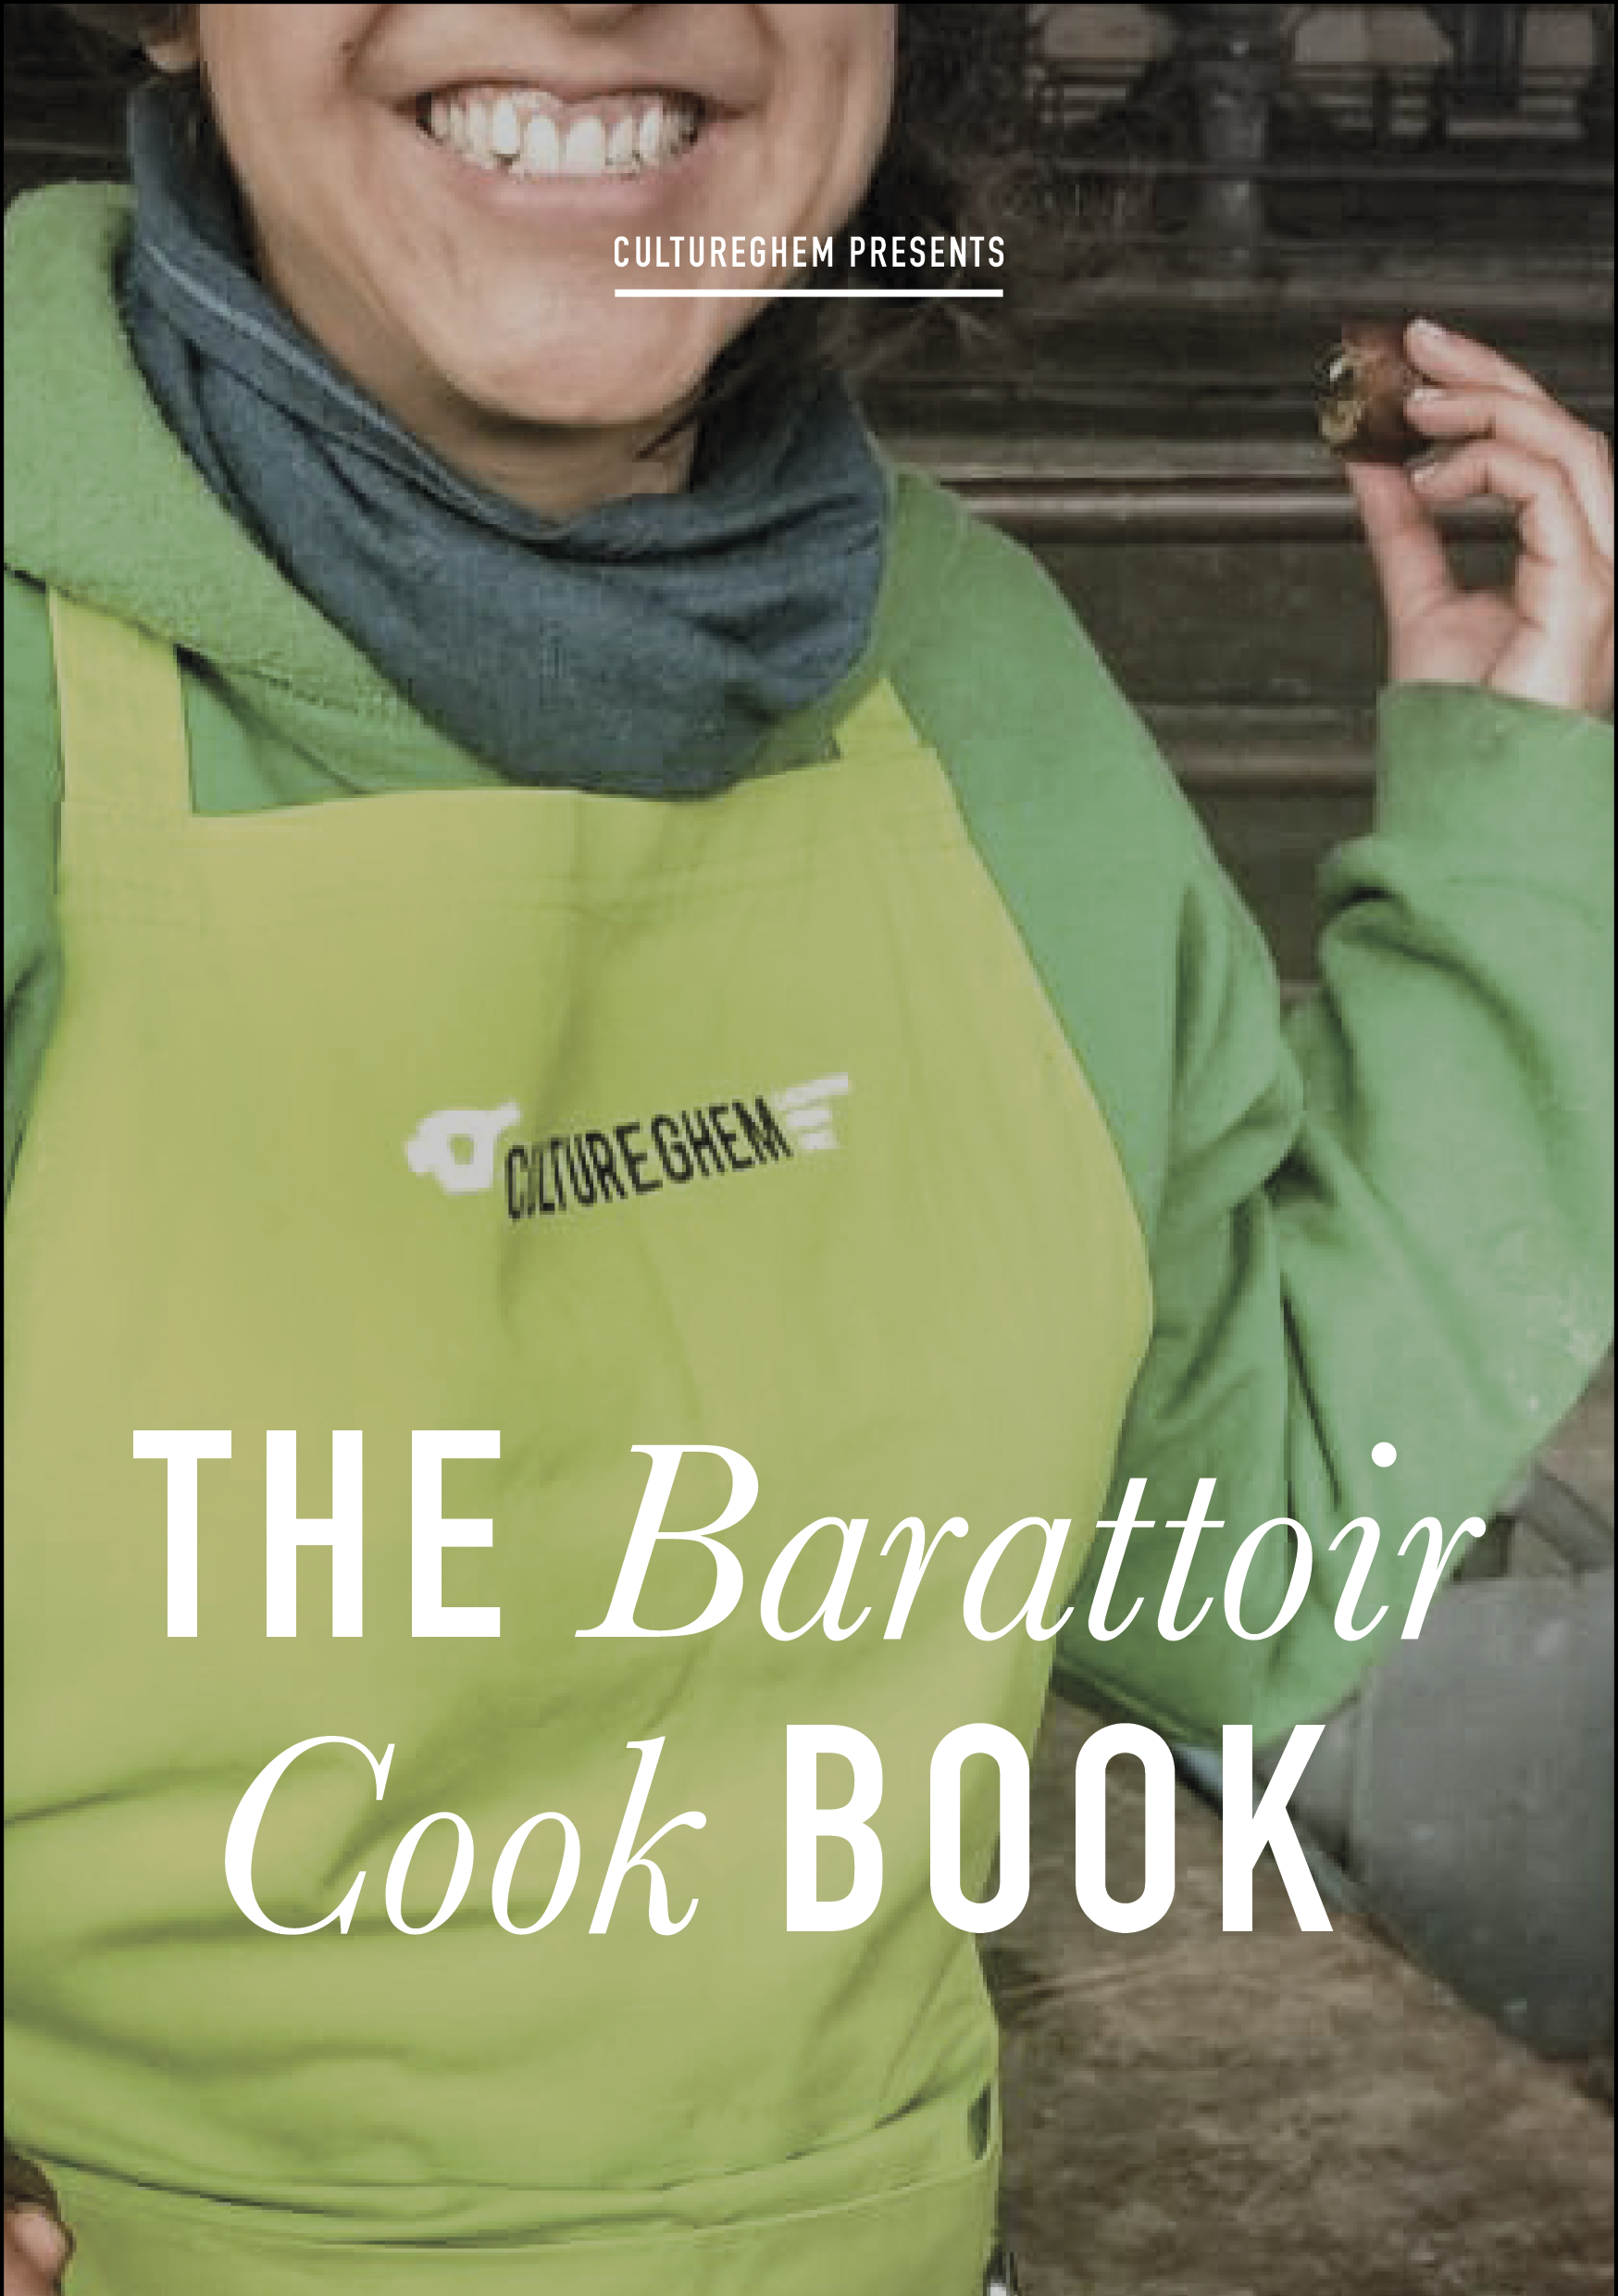 The Barattoir Cook Book